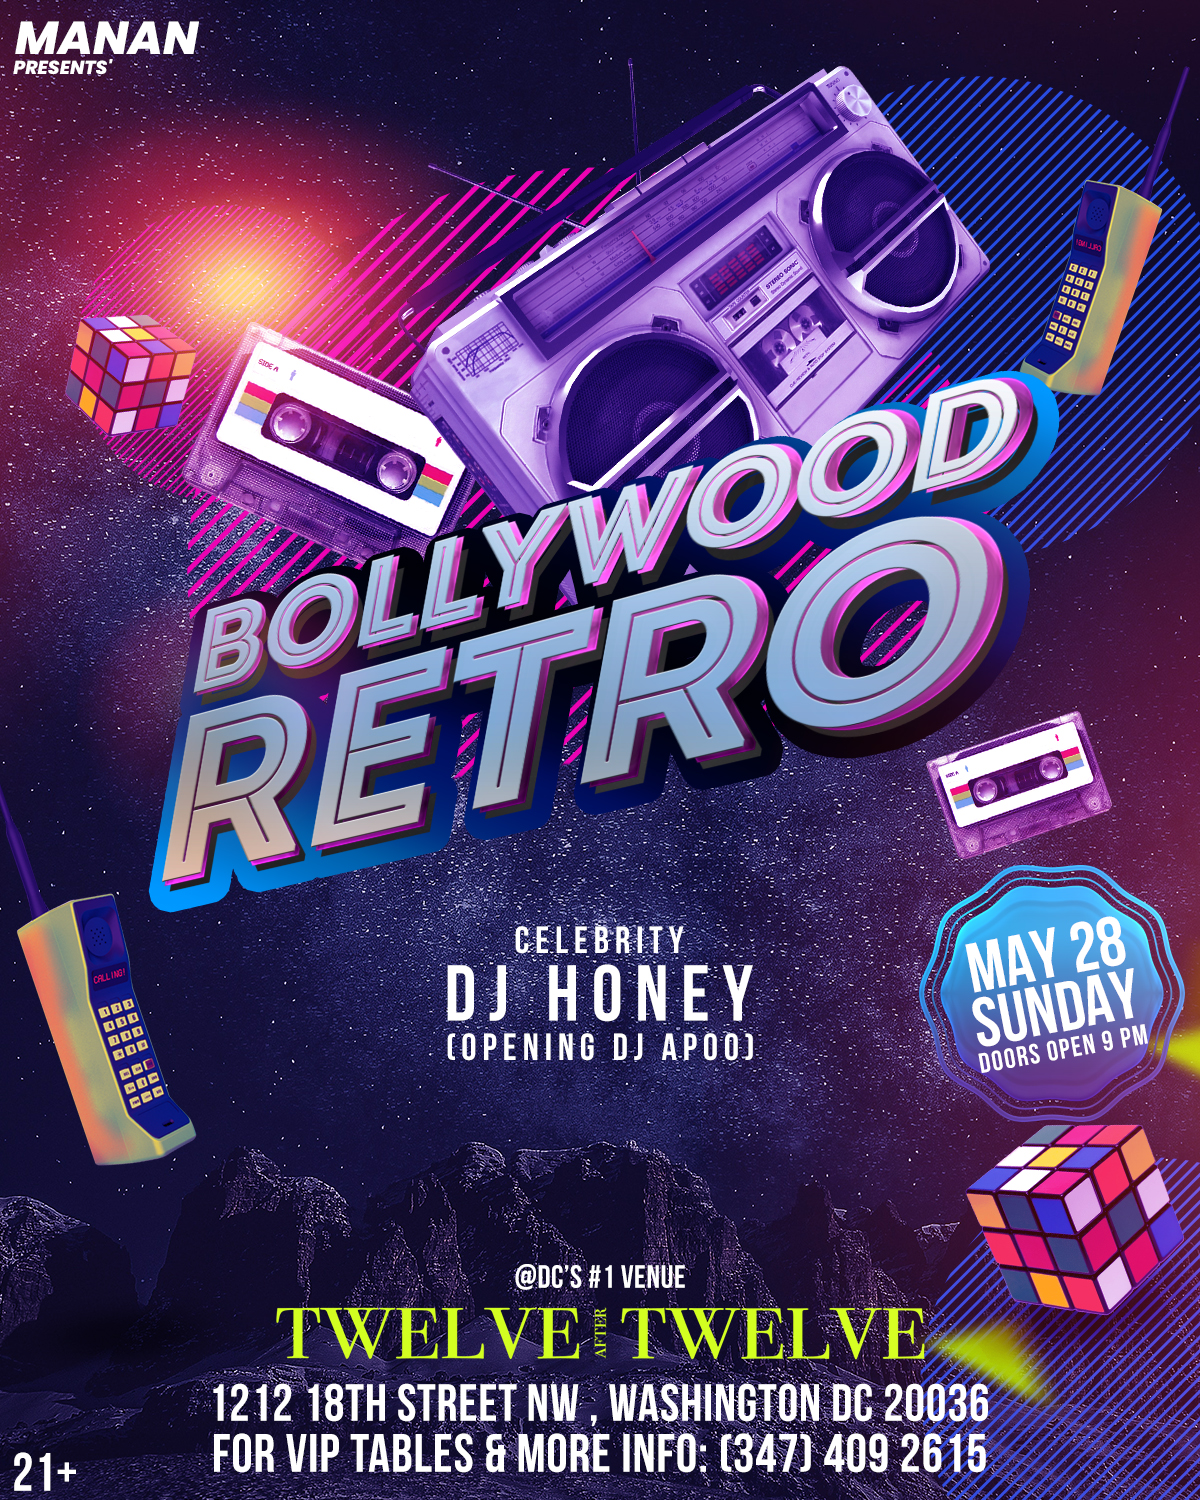 Manan Singh Katohora PRESENTS Official DMV Memorial Day Weekend Event - "BOLLYWOOD RETRO" @ DC's #1 Venue "TWELVE AFTER TWELVE" 